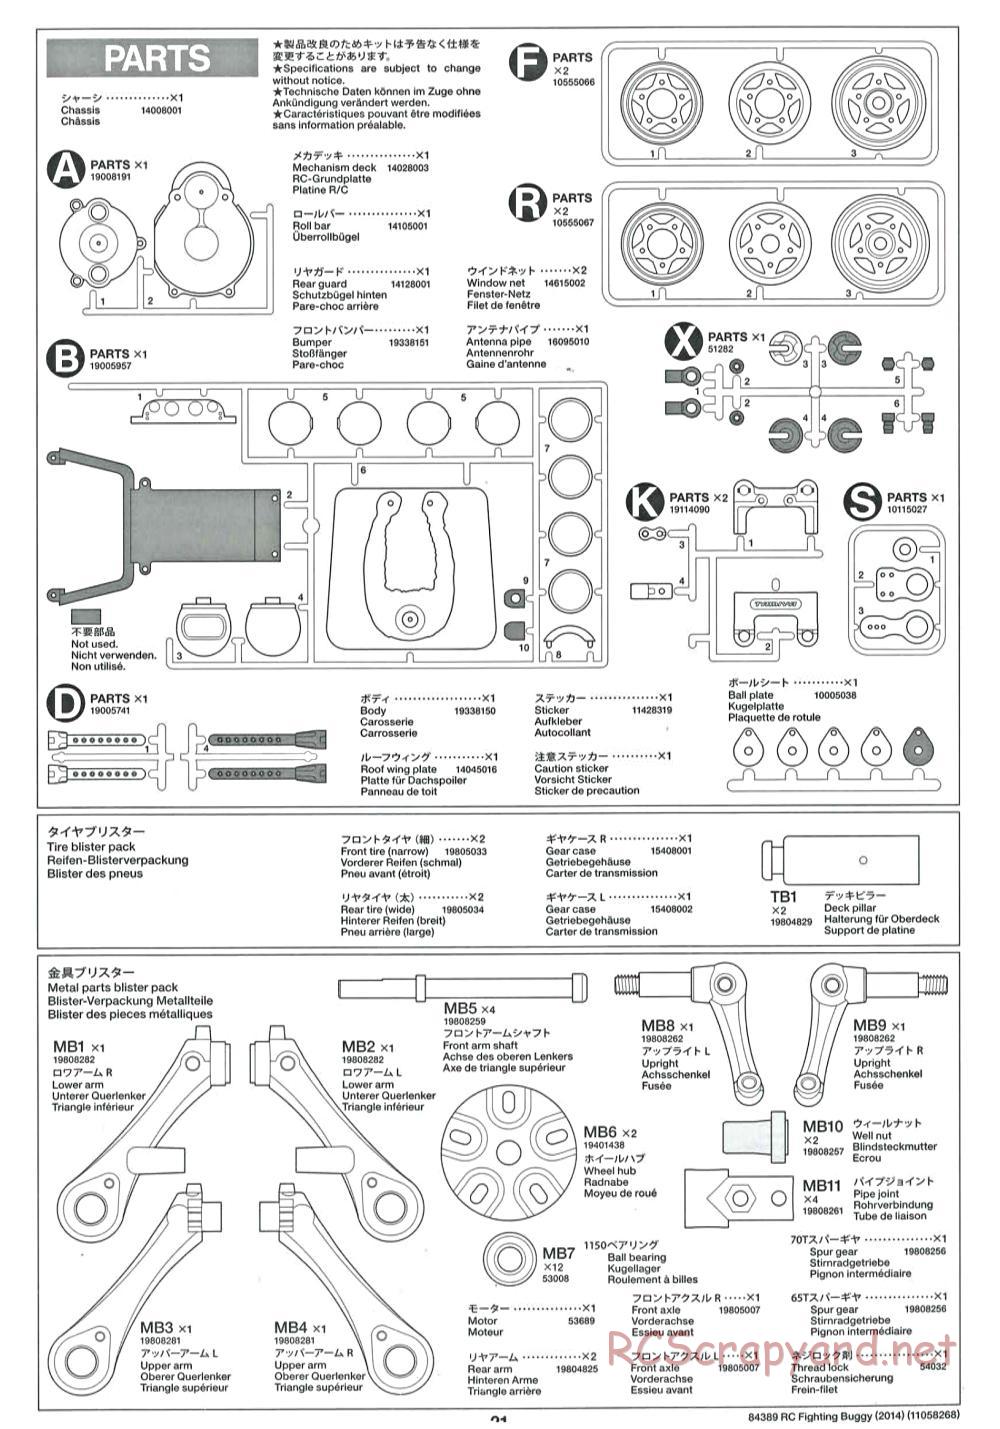 Tamiya - Fighting Buggy (2014) Chassis - Manual - Page 21